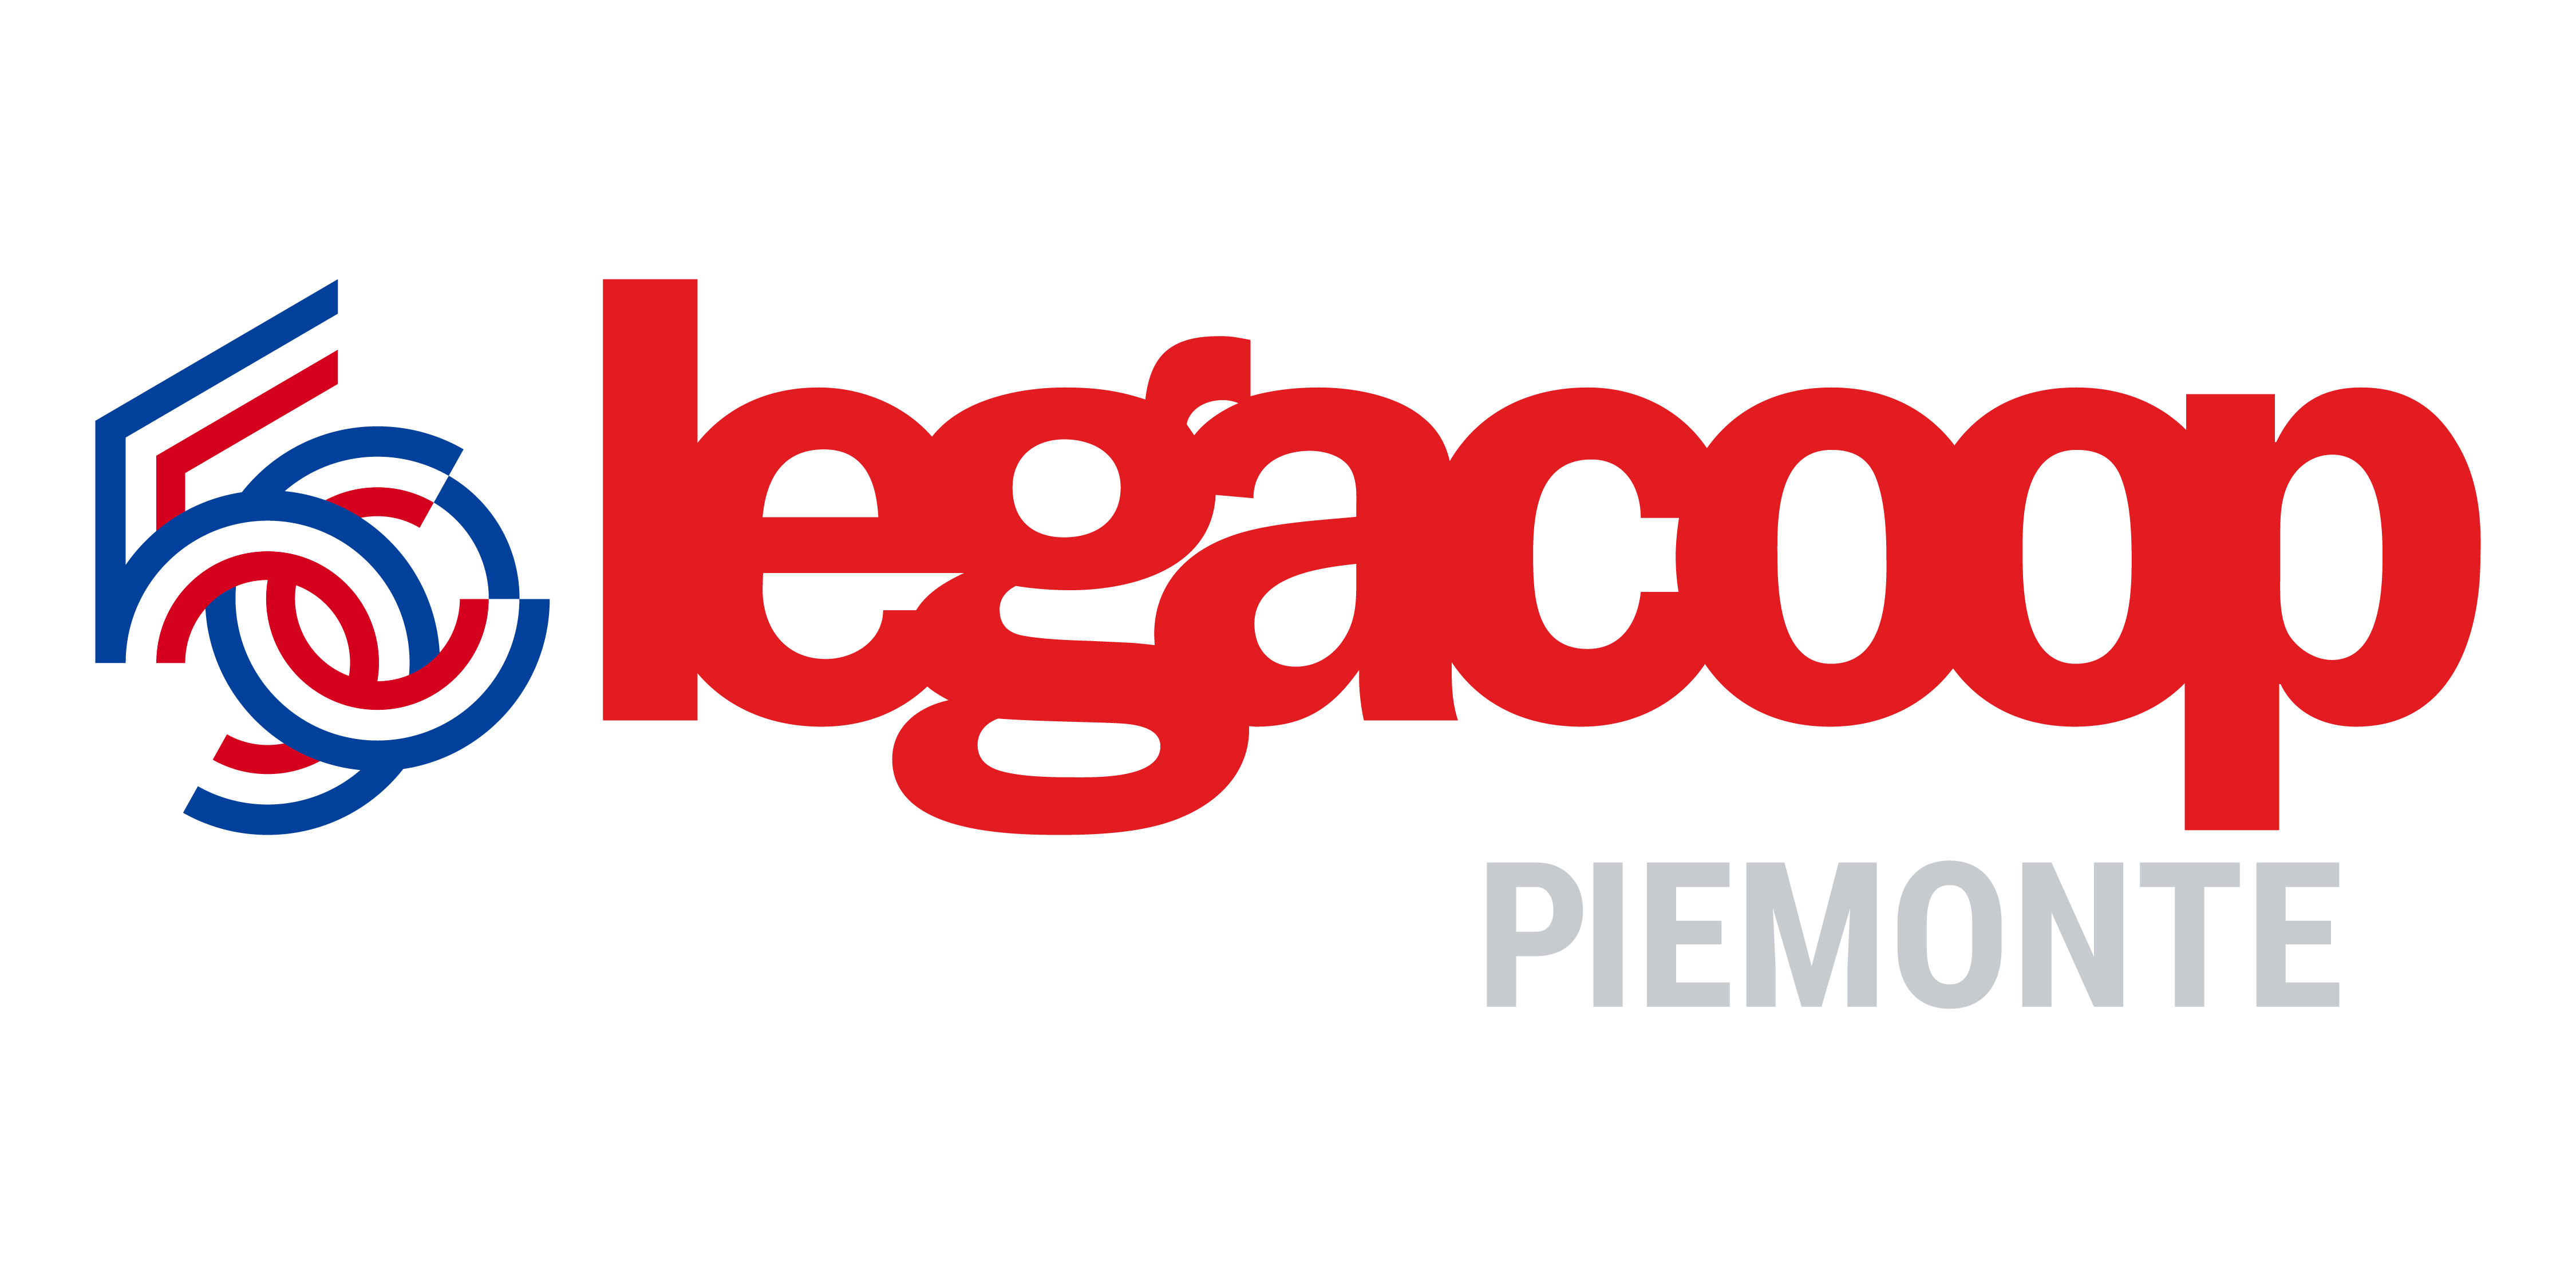 Legacoop Piemonte